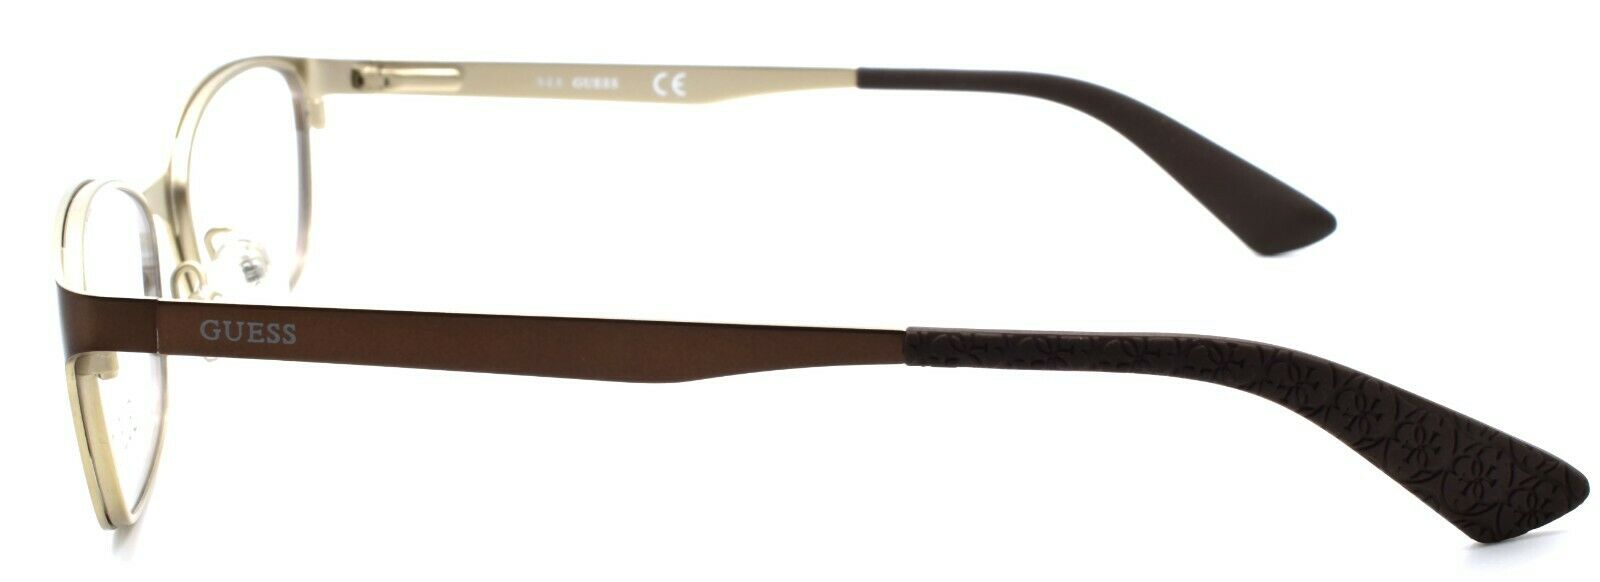 3-GUESS GU2515 049 Women's Eyeglasses Frames Petite 50-16-135 Matte Dark Brown-664689787838-IKSpecs